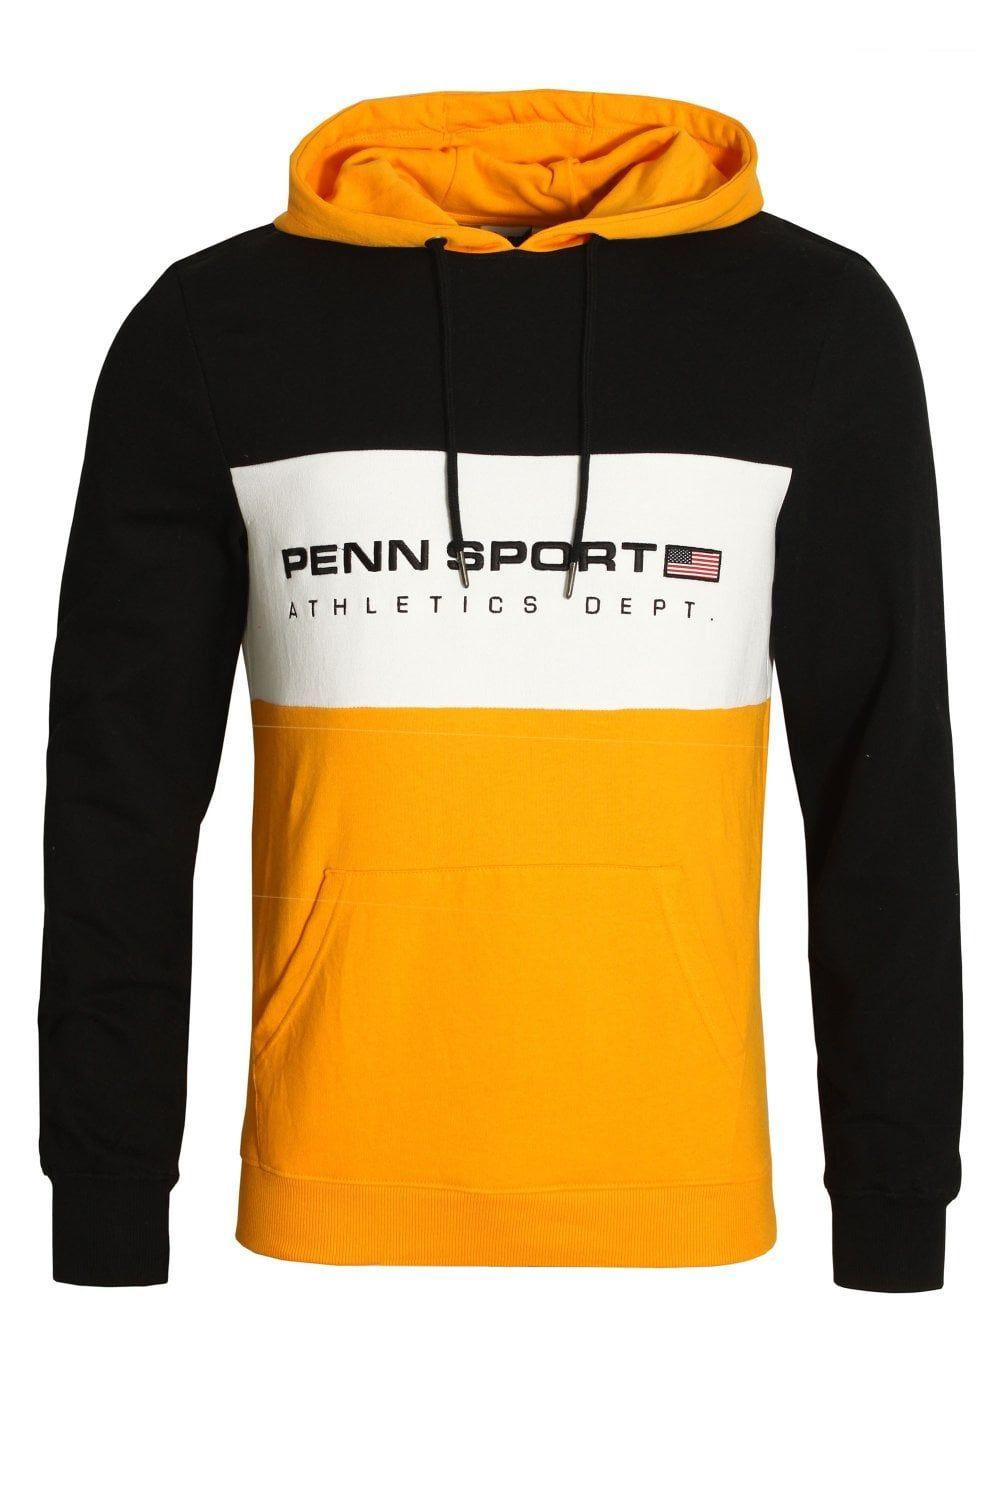 Orange Block Logo - Penn Sport Block Logo OTH Hoodie. Shop Penn Sport Hoodies & Sweats